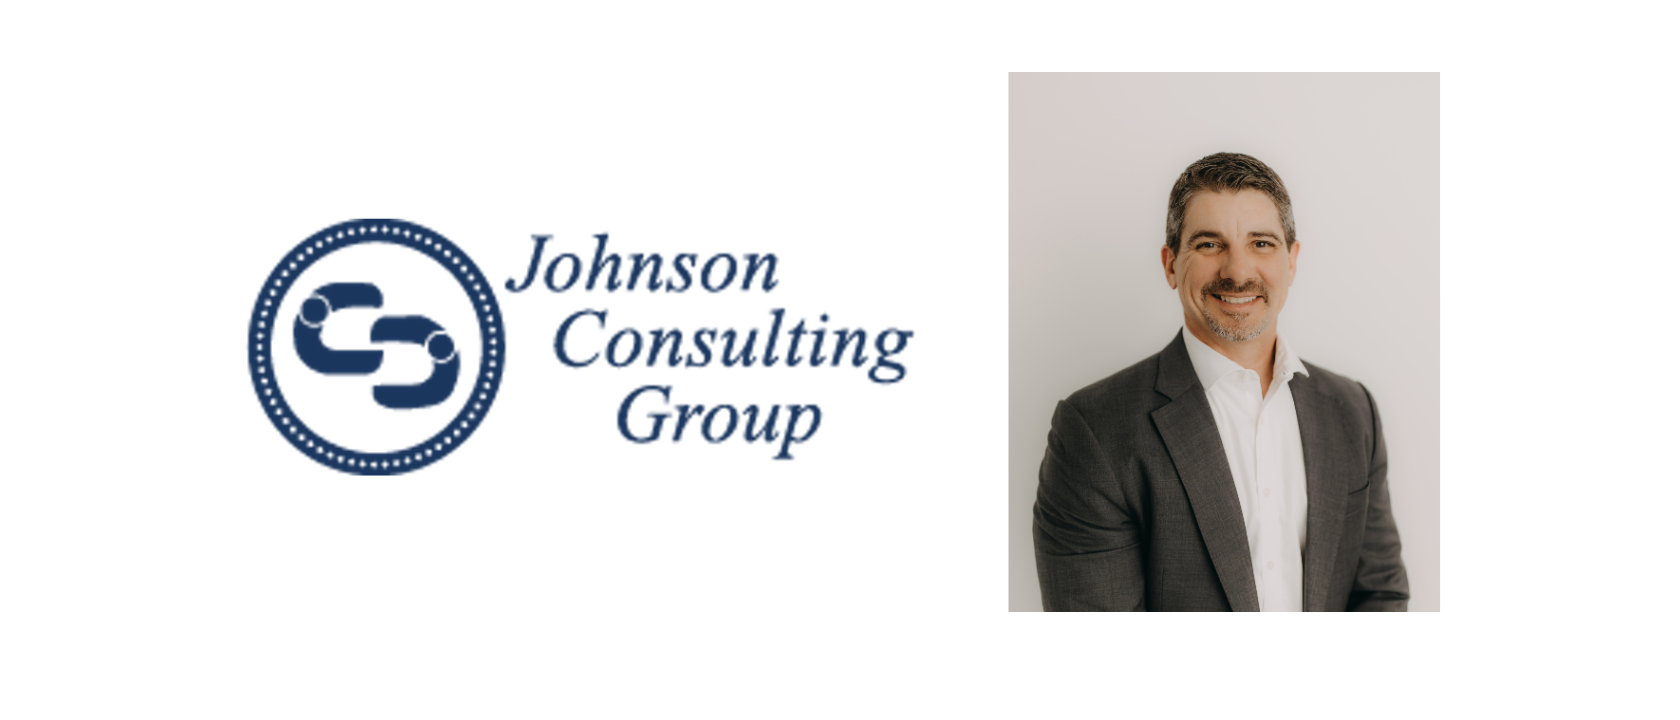 Johnson Consulting Logo and Derrick Hussman